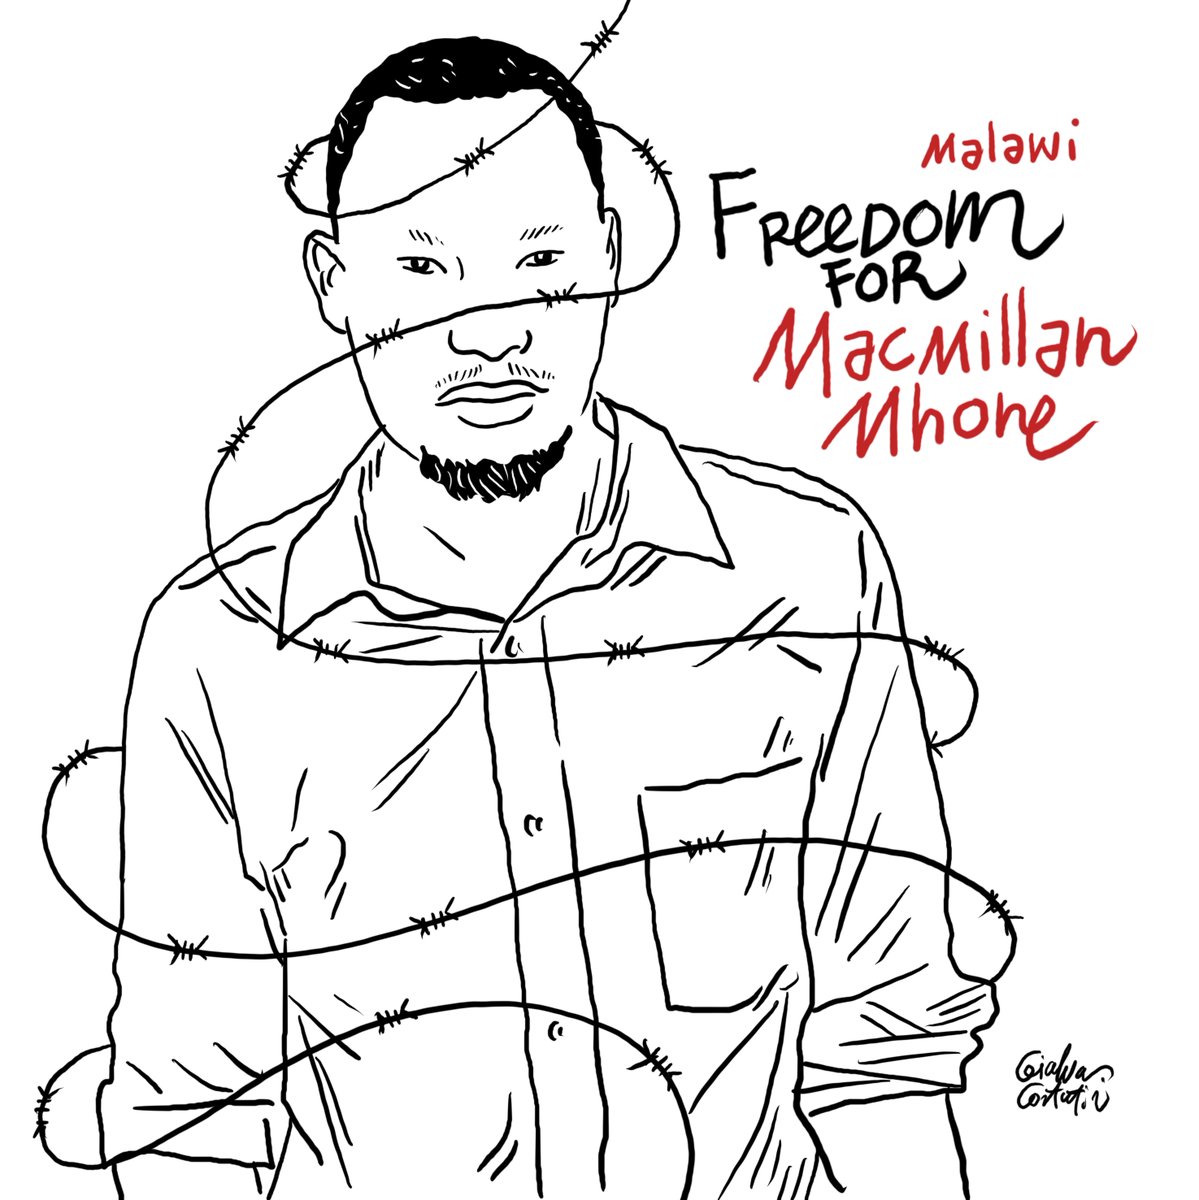 Freedom for Macmillan Mhone #Malawi @CPJAfrica @pressfreedom @Malawi24